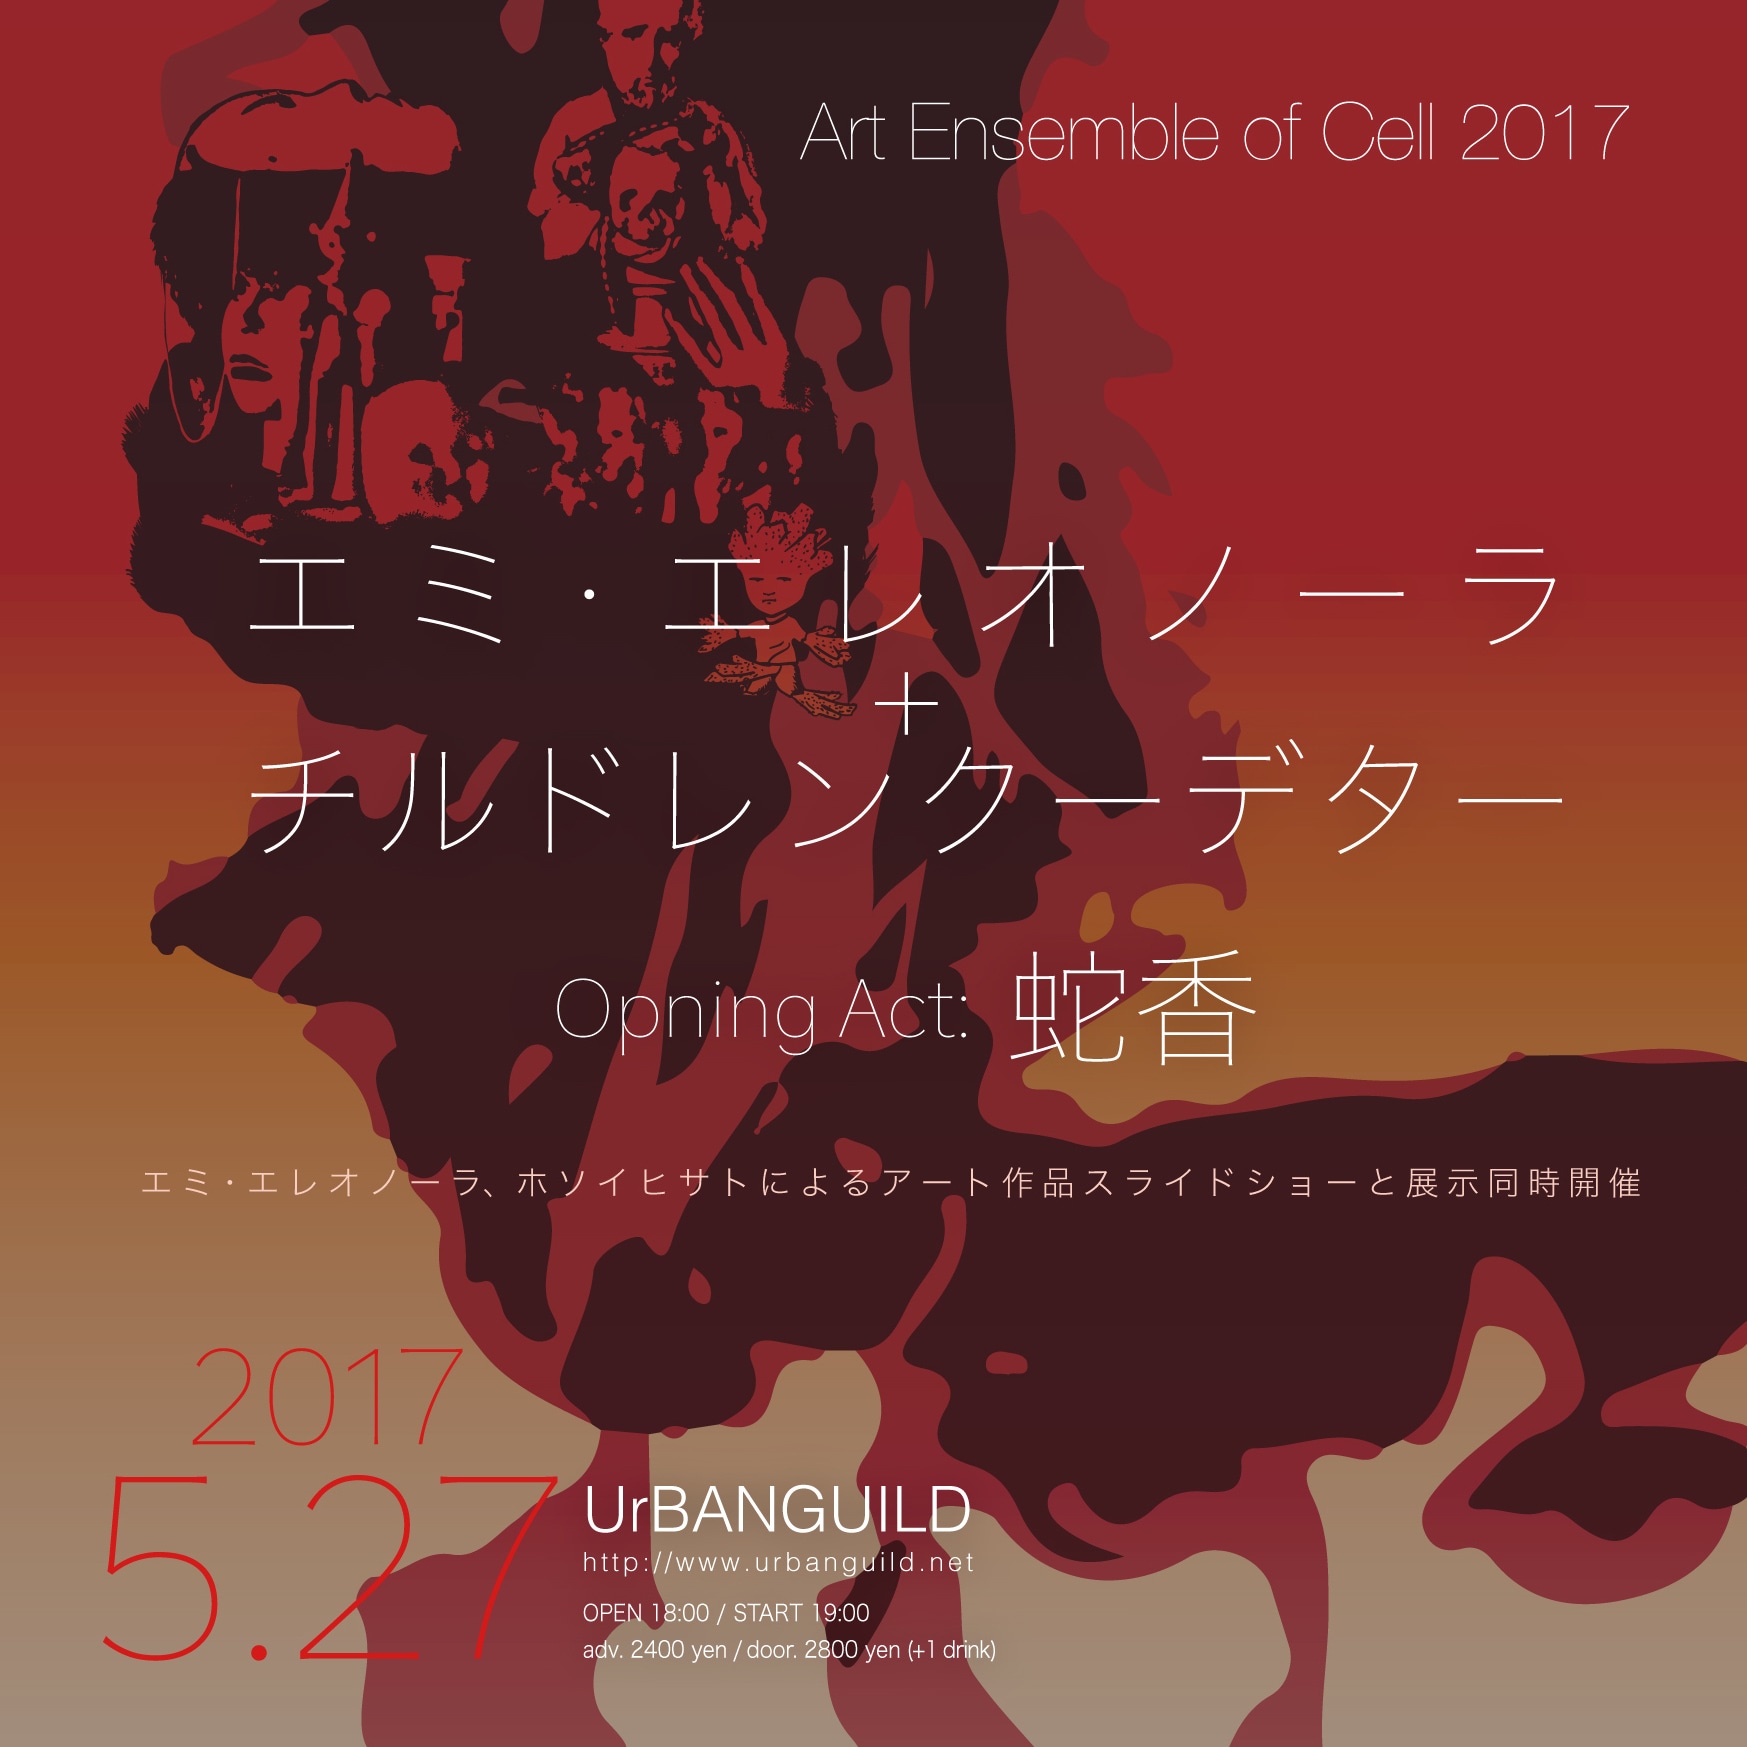 2017-05-27 Art Ensenble of Cell 2017 Flyer-square